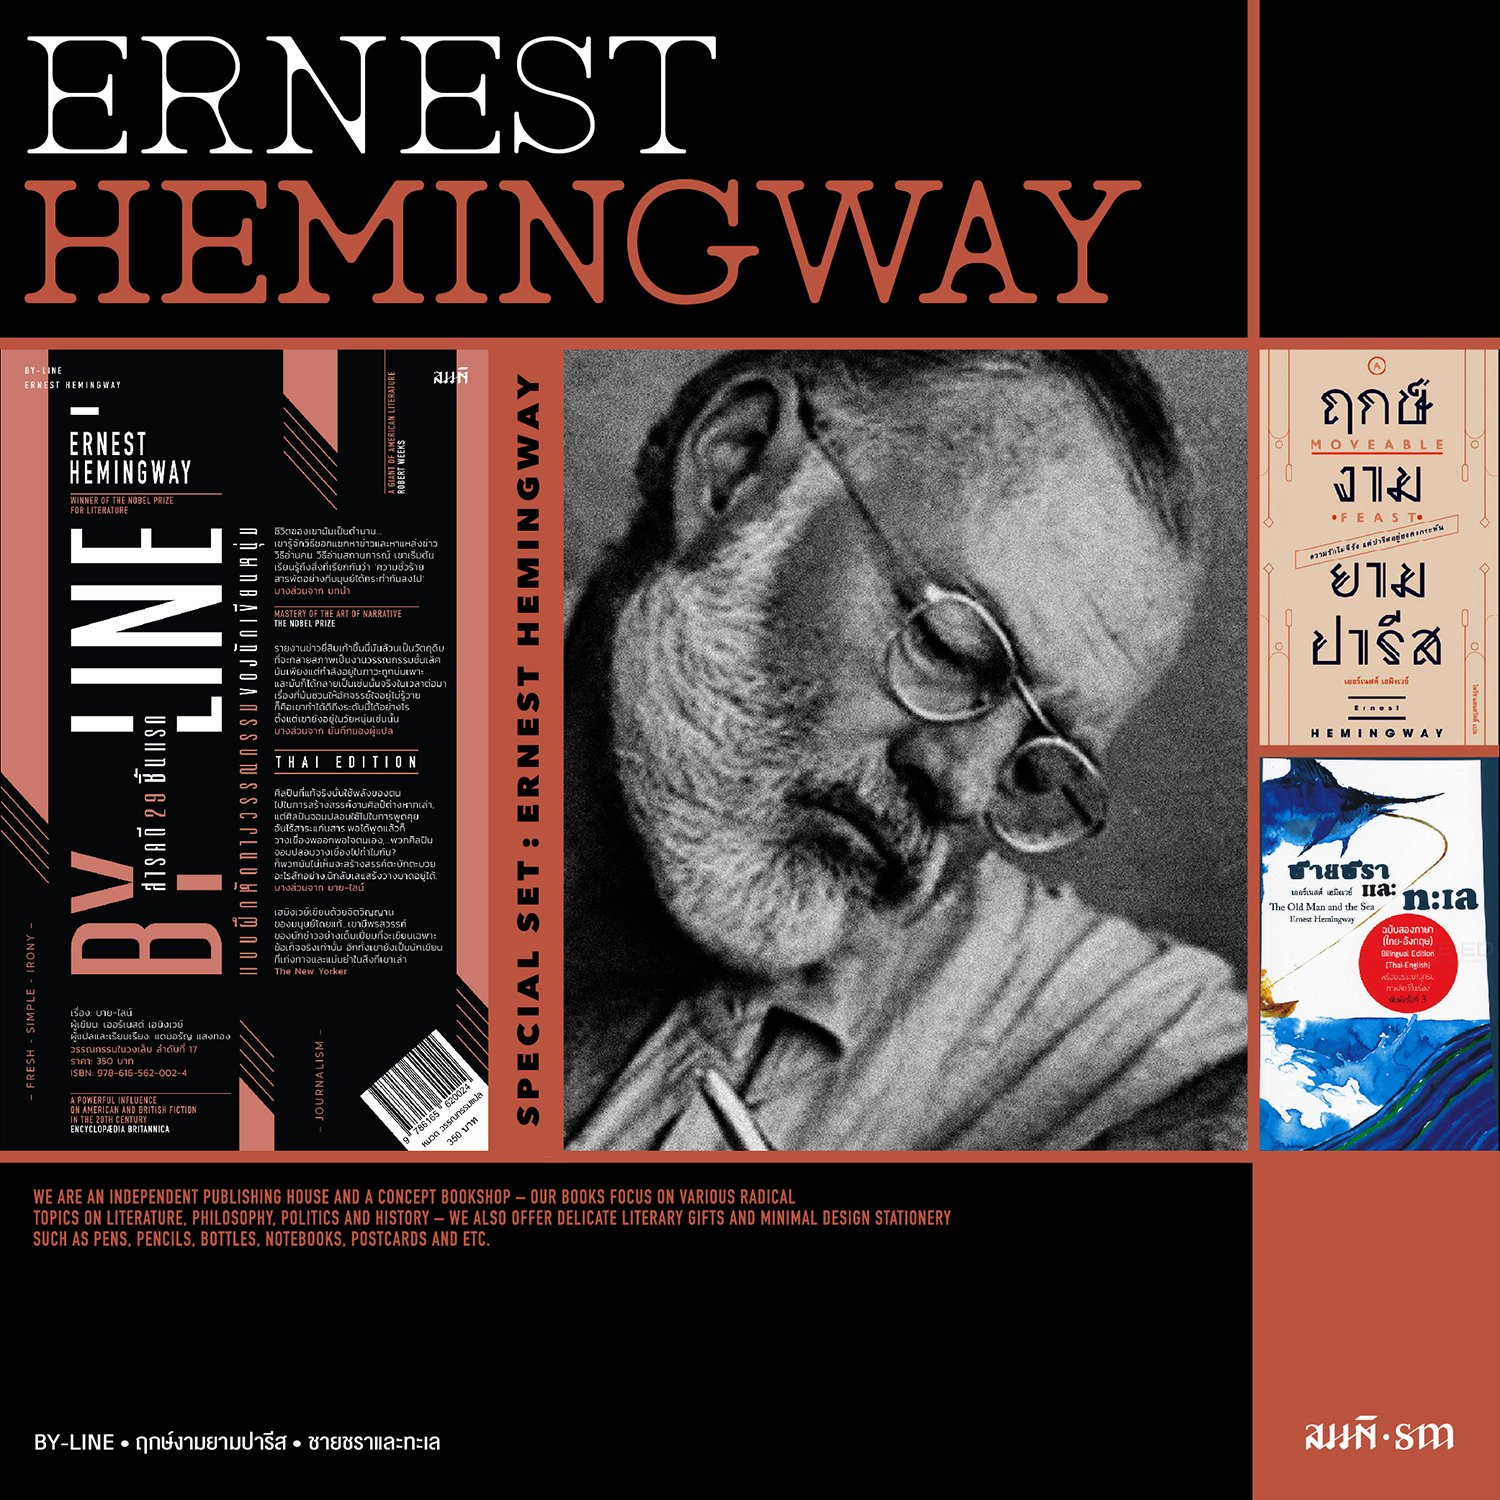 Set เออร์เนสต์ เฮมิงเวย์ (Ernest Hemingway) นักเขียนรางวัลโนเบล